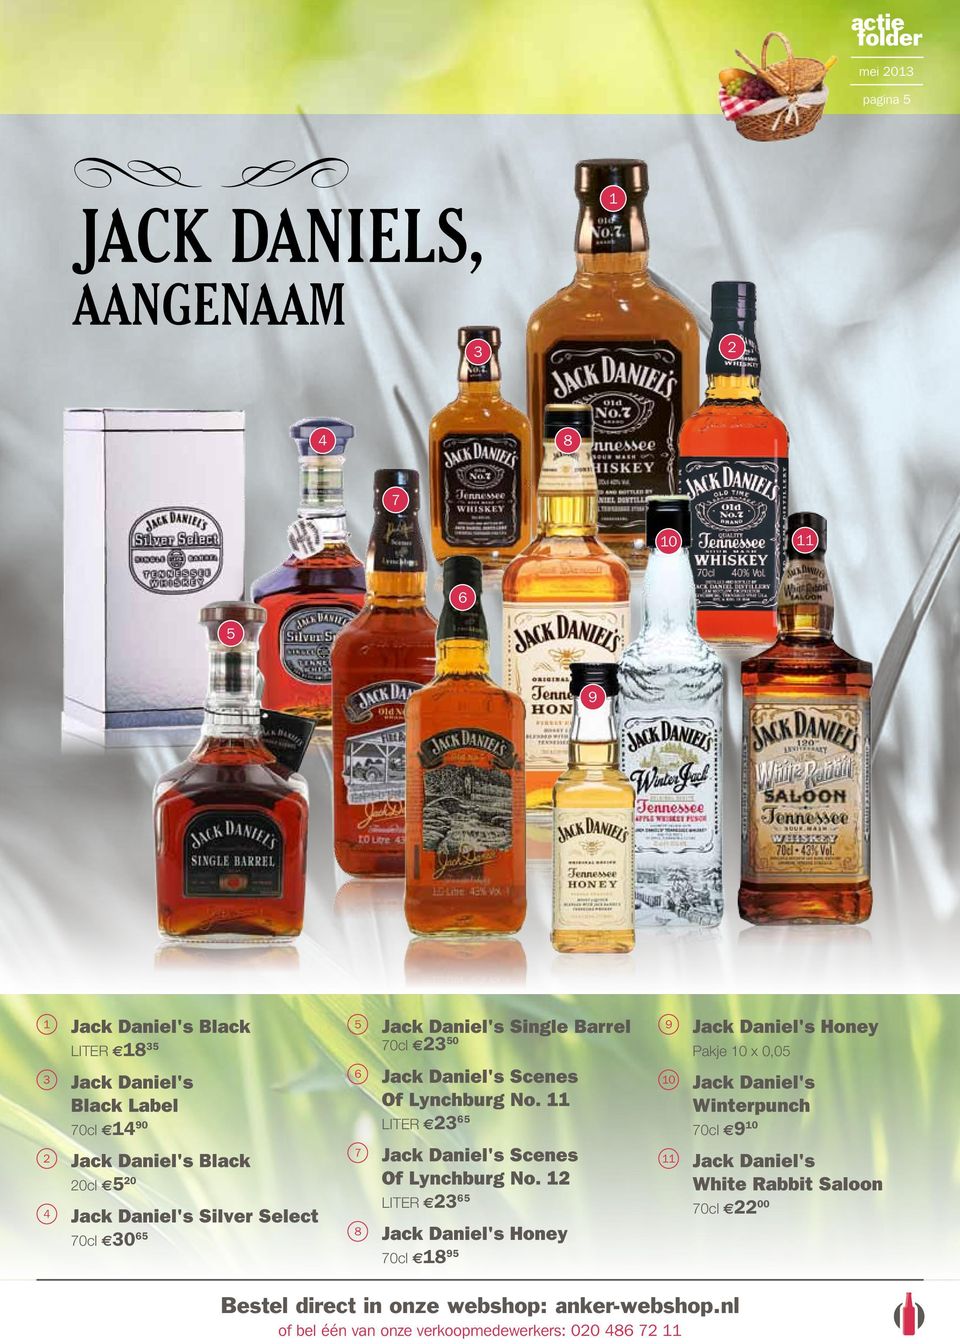 12 liter 2365 Jack Danil's Whit Rabbit Saloon 2200 1 5 6 3 7 2 Jack Danil's Silvr Slct 3065 4 Jack Danil's Singl Barrl 8 9 Jack